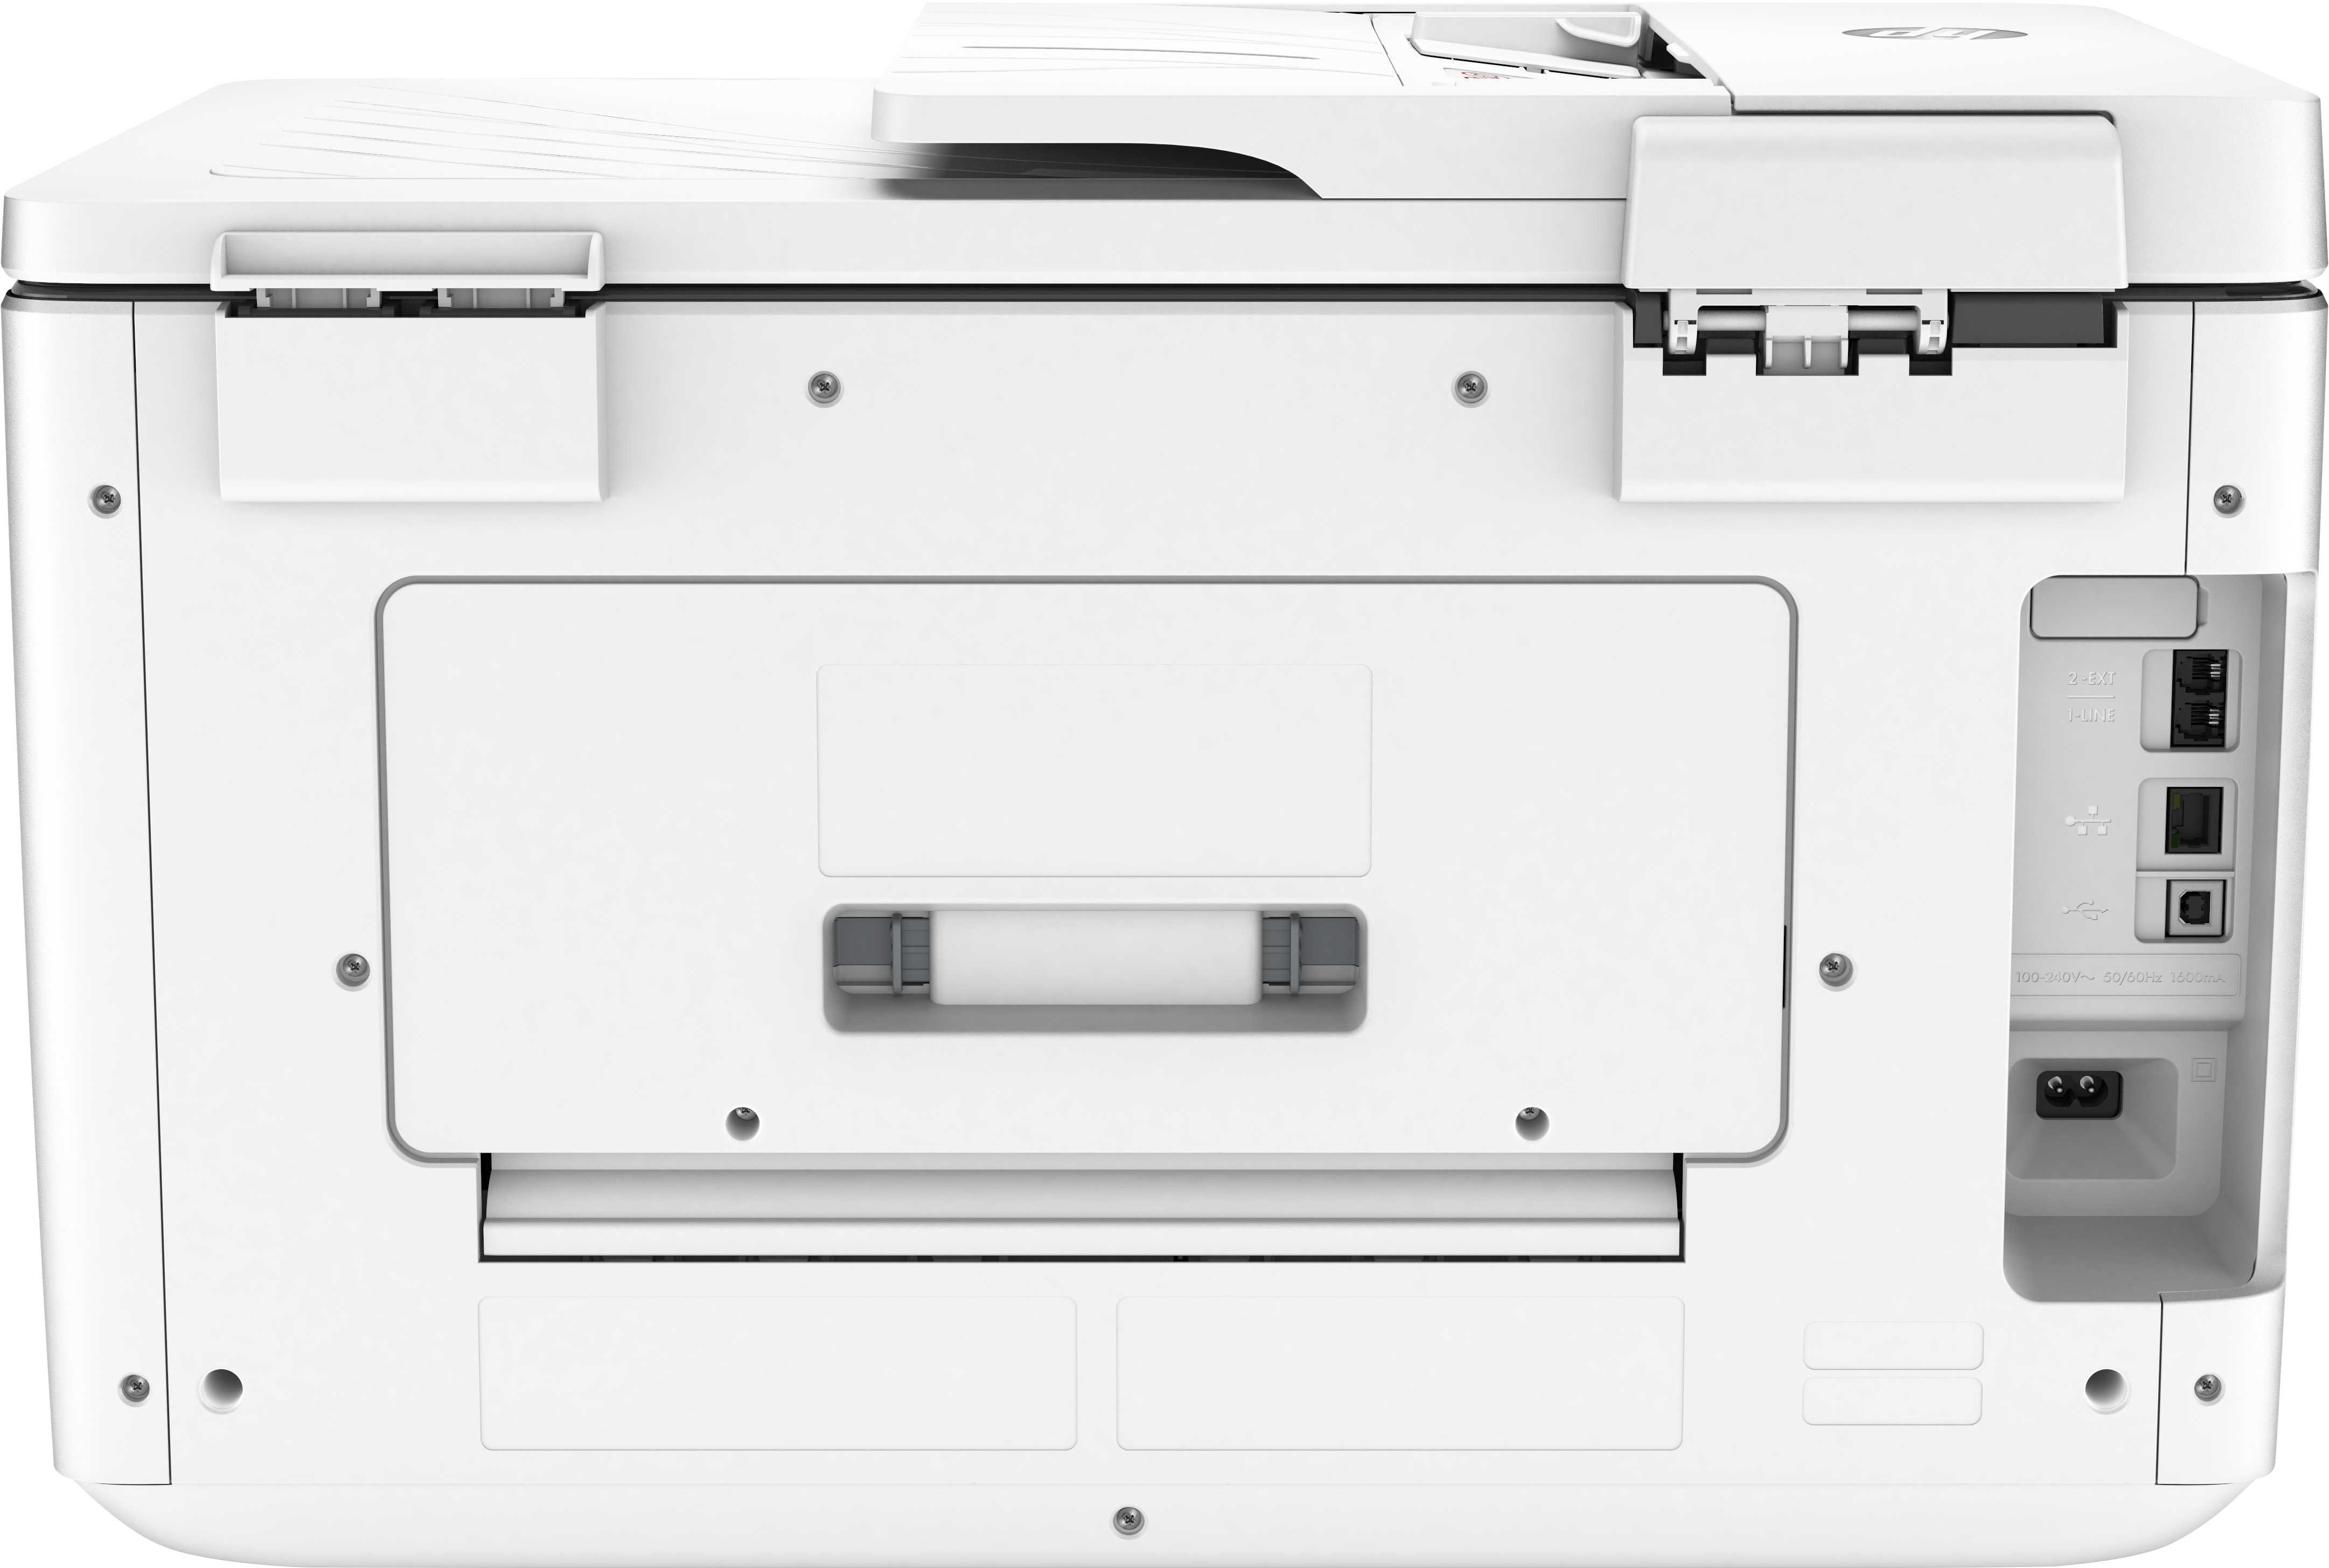 4-in-1 Netzwerkfähig 7740 HP HP Tintenstrahldruck WLAN OfficeJet Pro Großformat-Multifunktionsdrucker